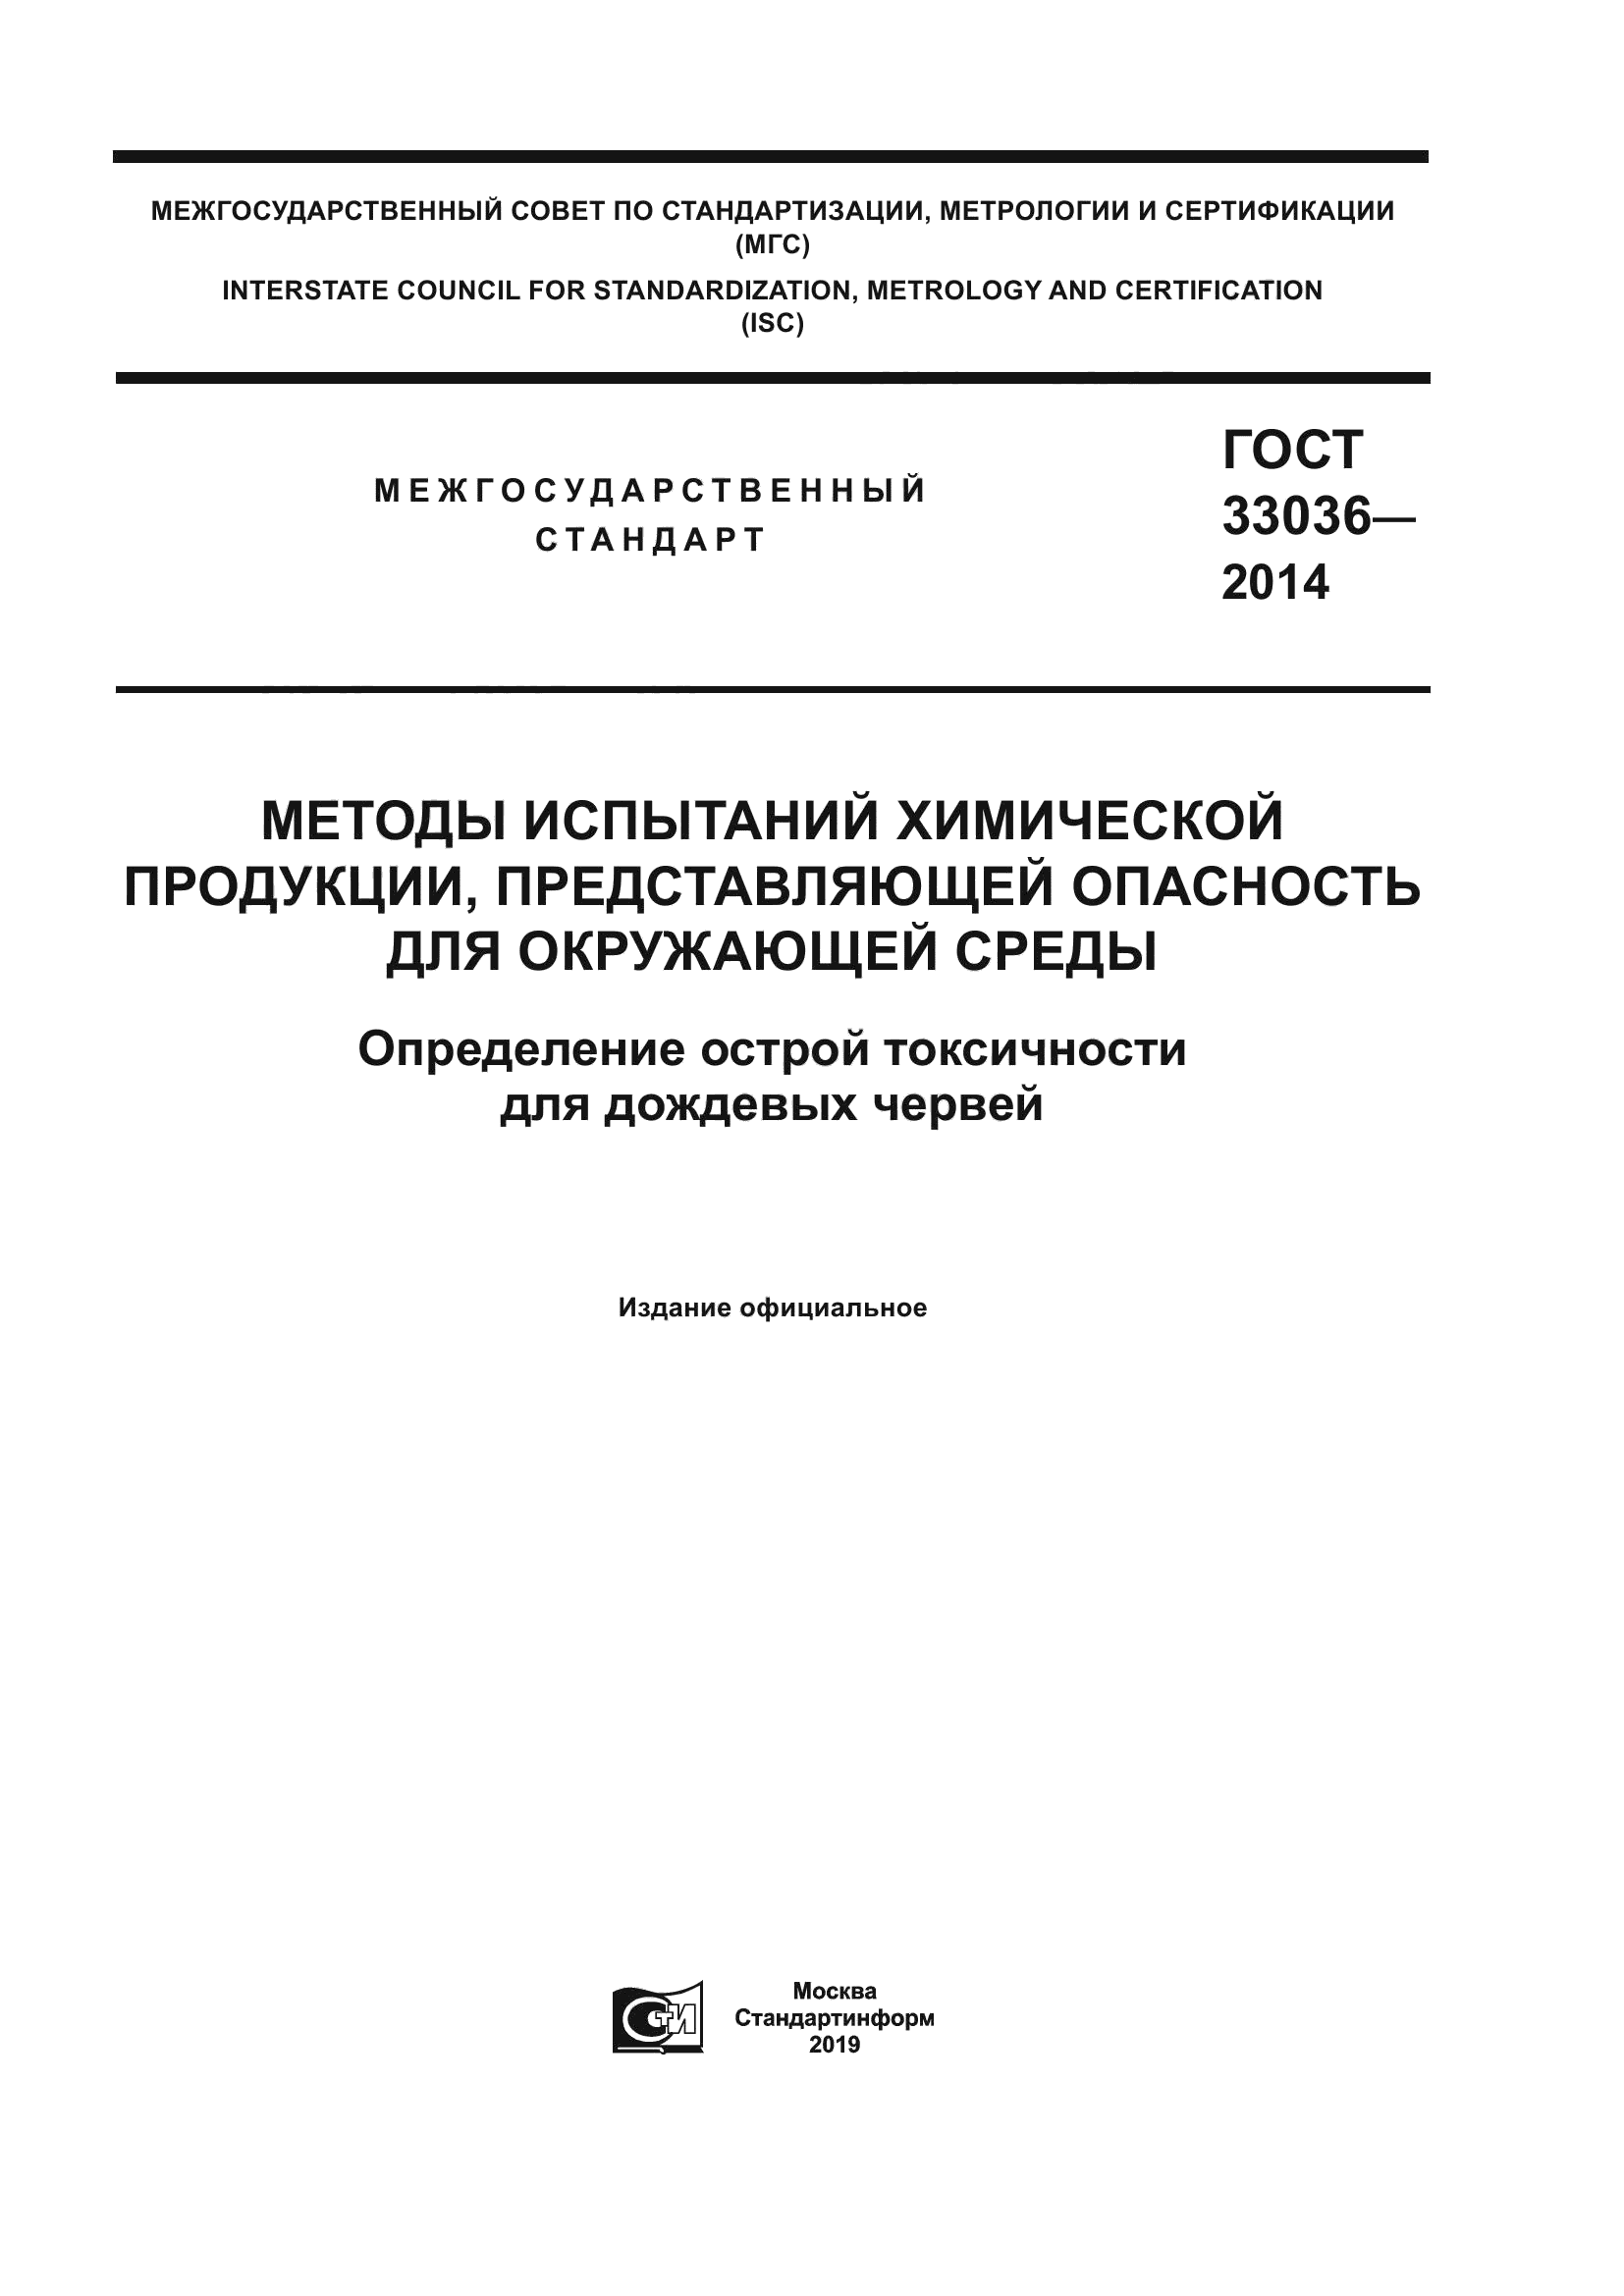 ГОСТ 33036-2014